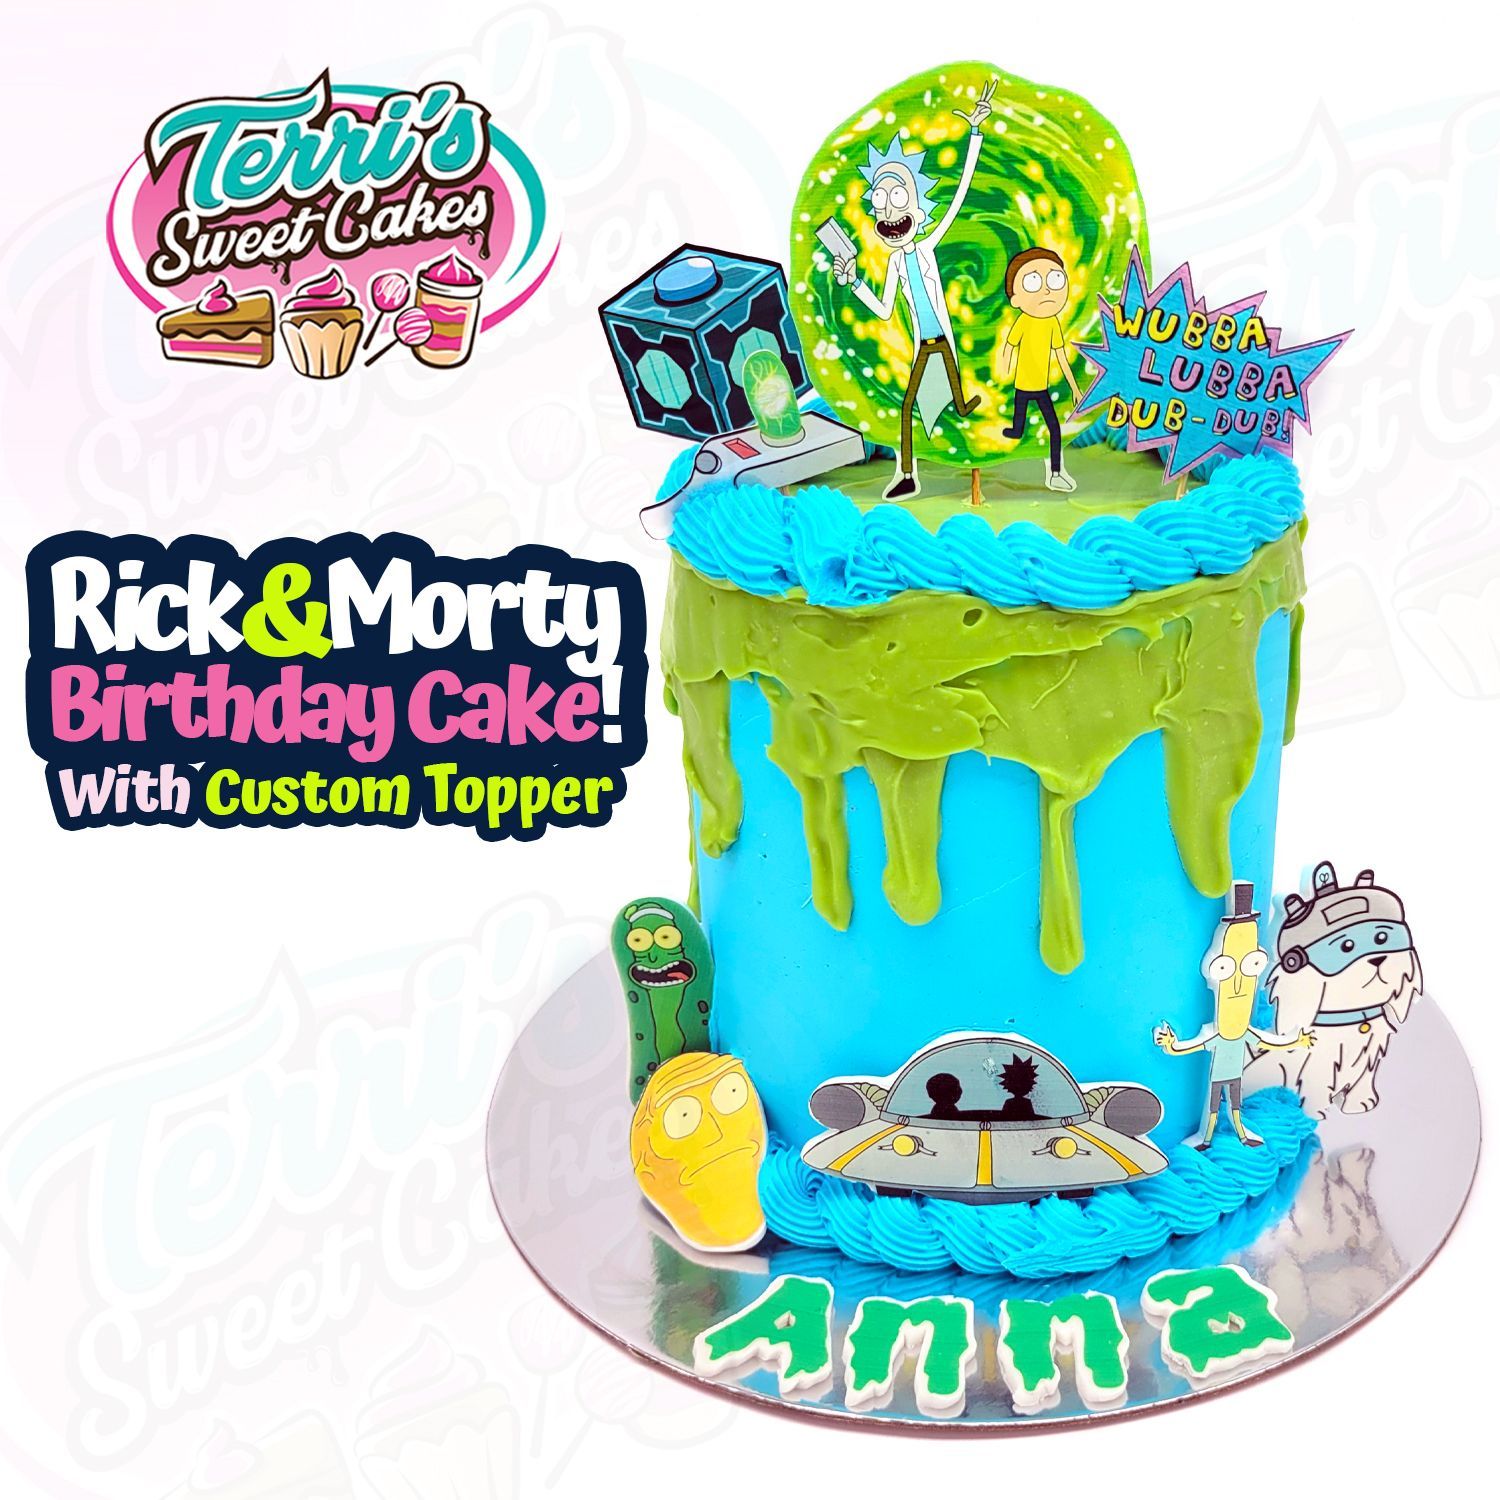 Rick & Morty Birthday Cake by Terri's Sweet Cakes!